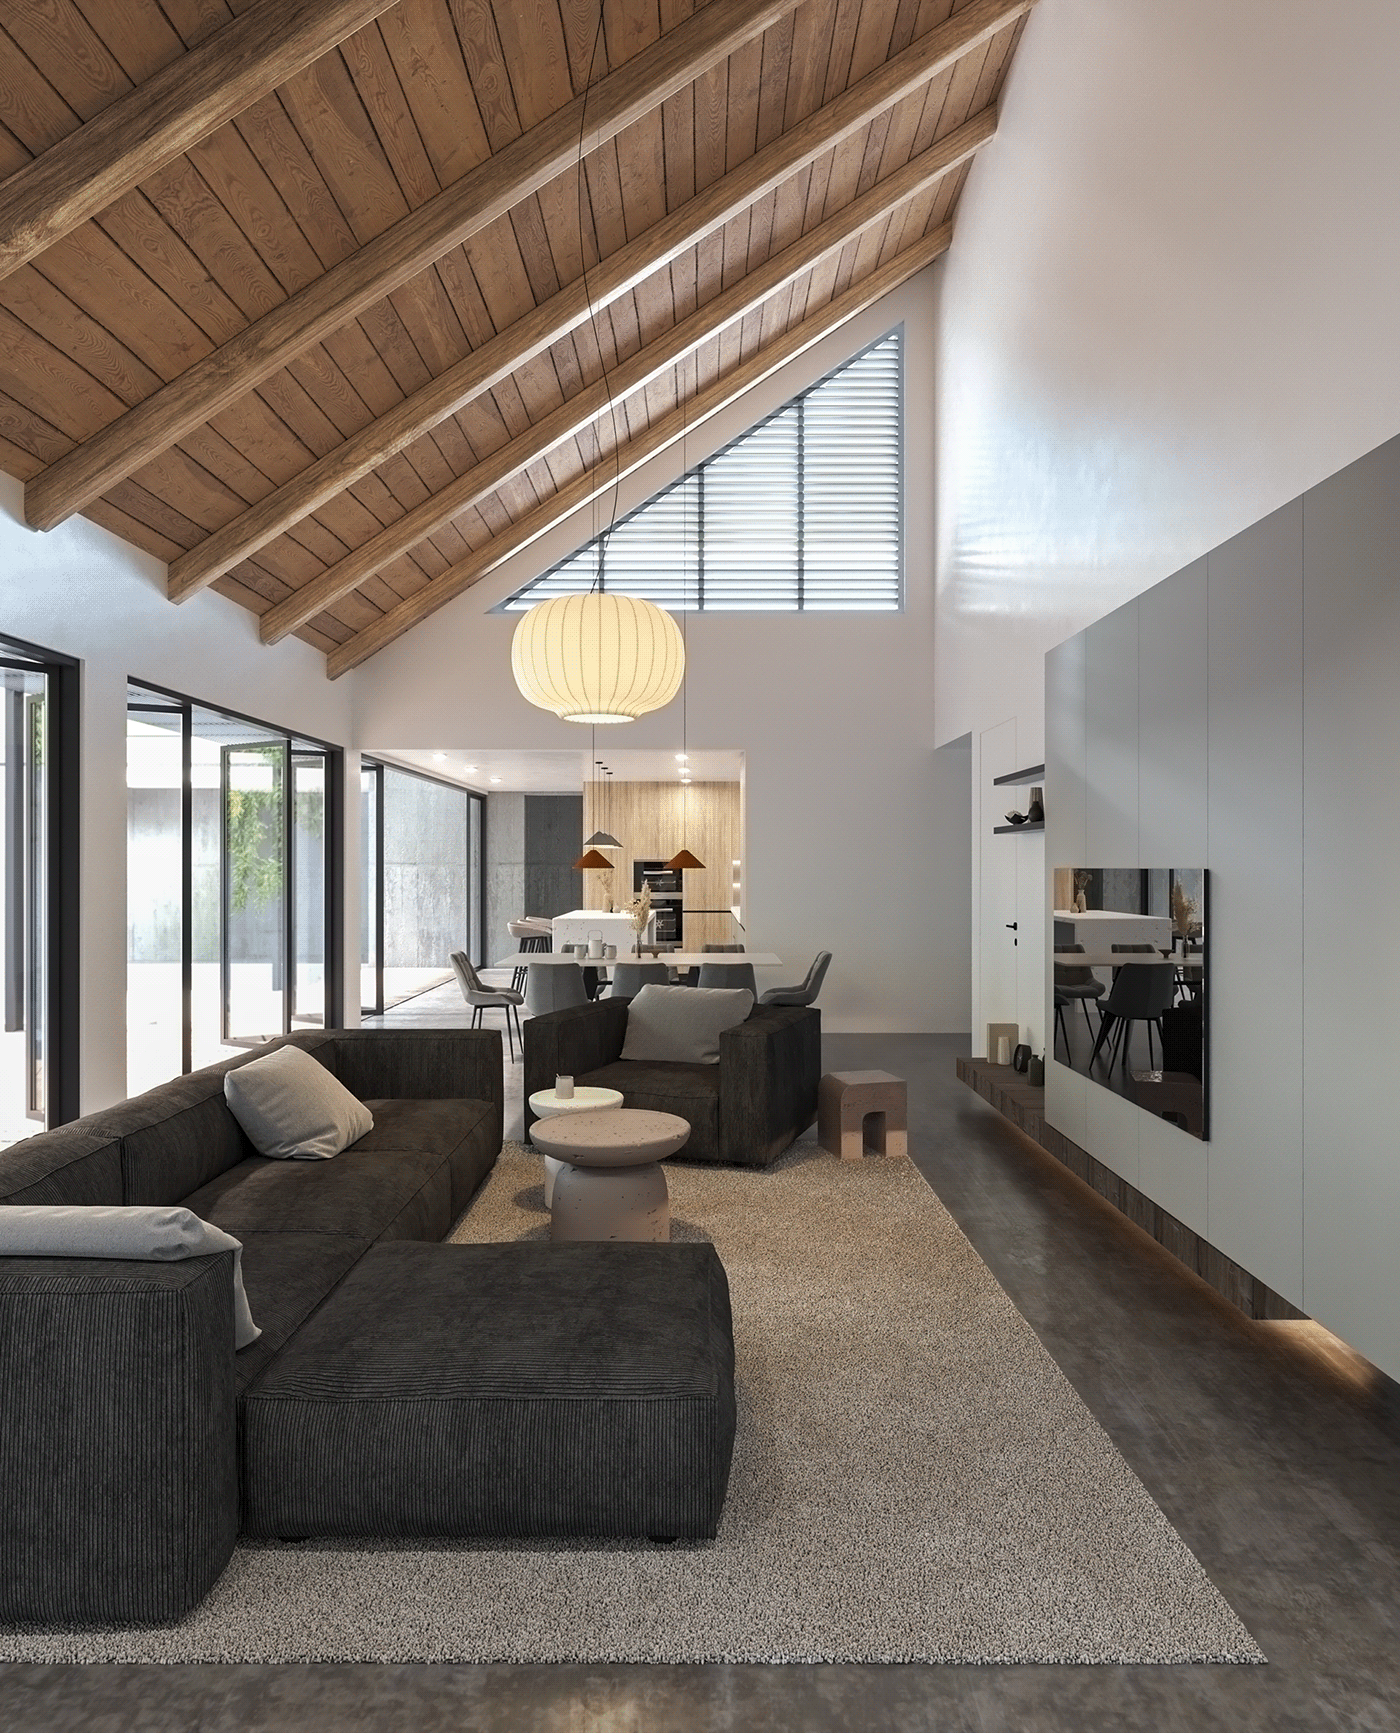 3D 3ds max architecture corona interior design  modern Render visualization